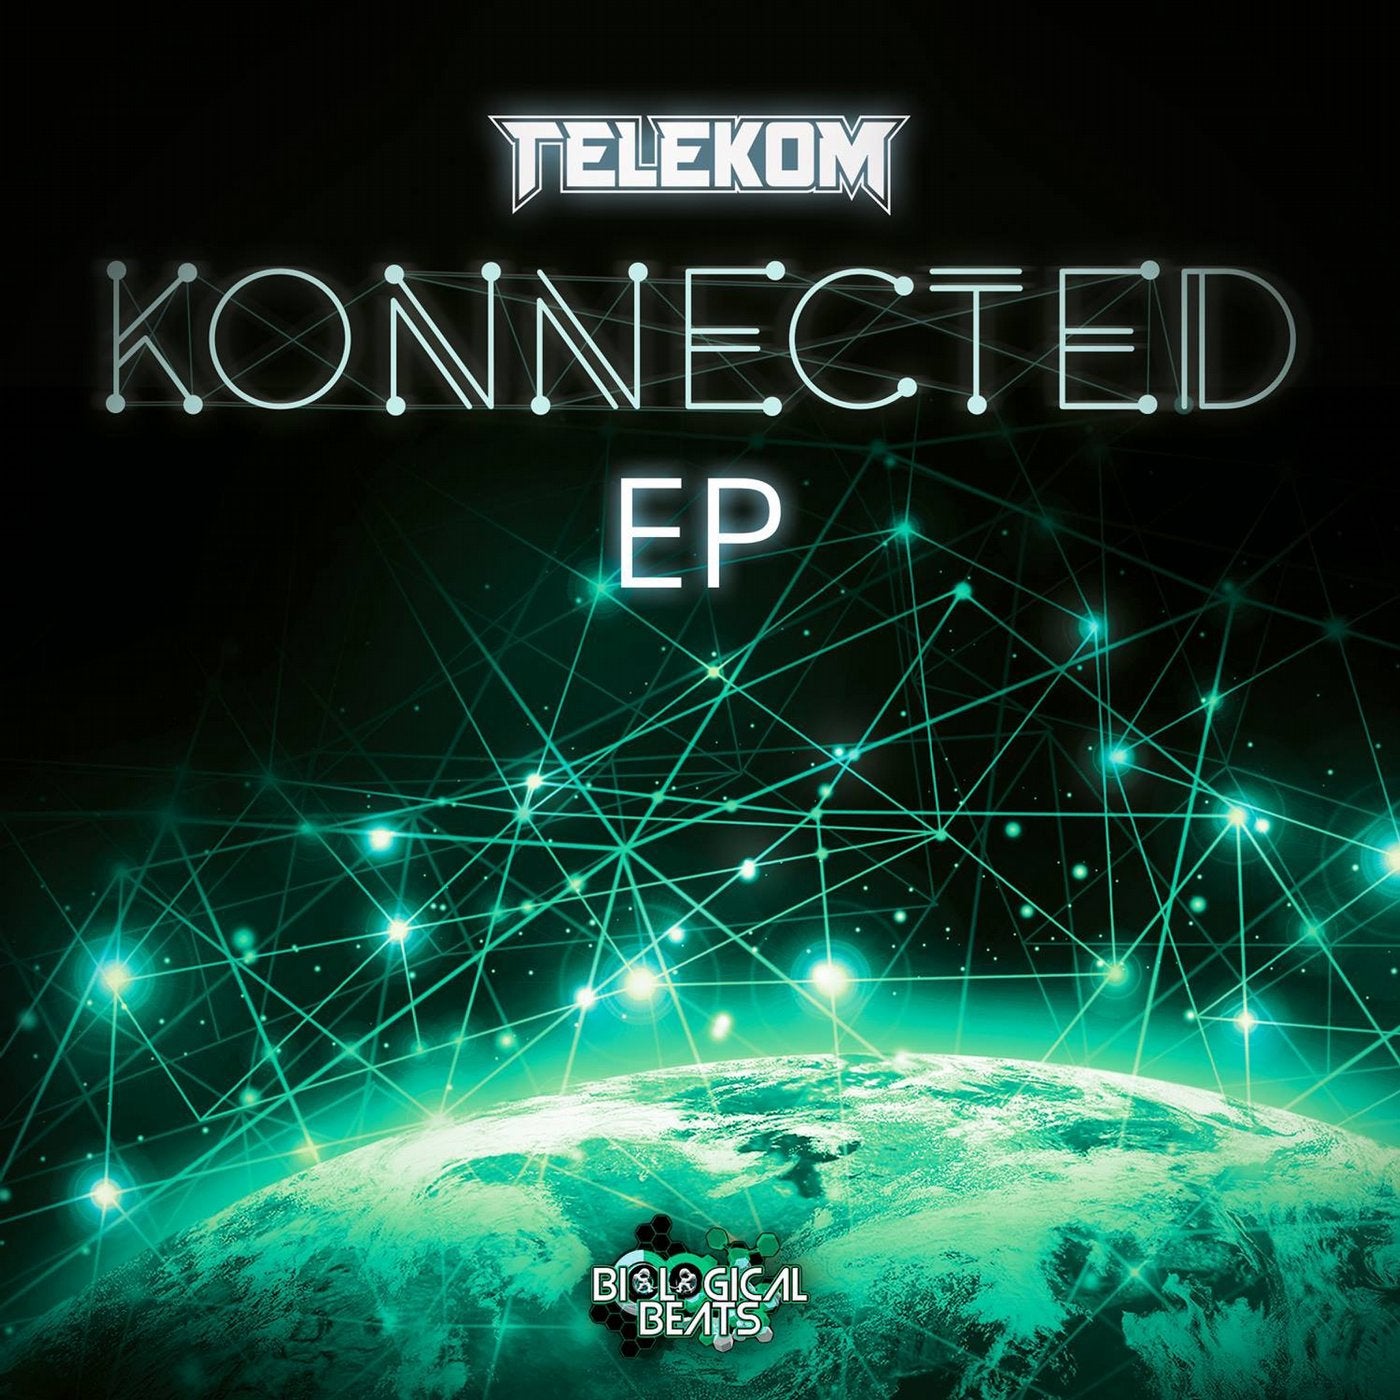 Konnected EP